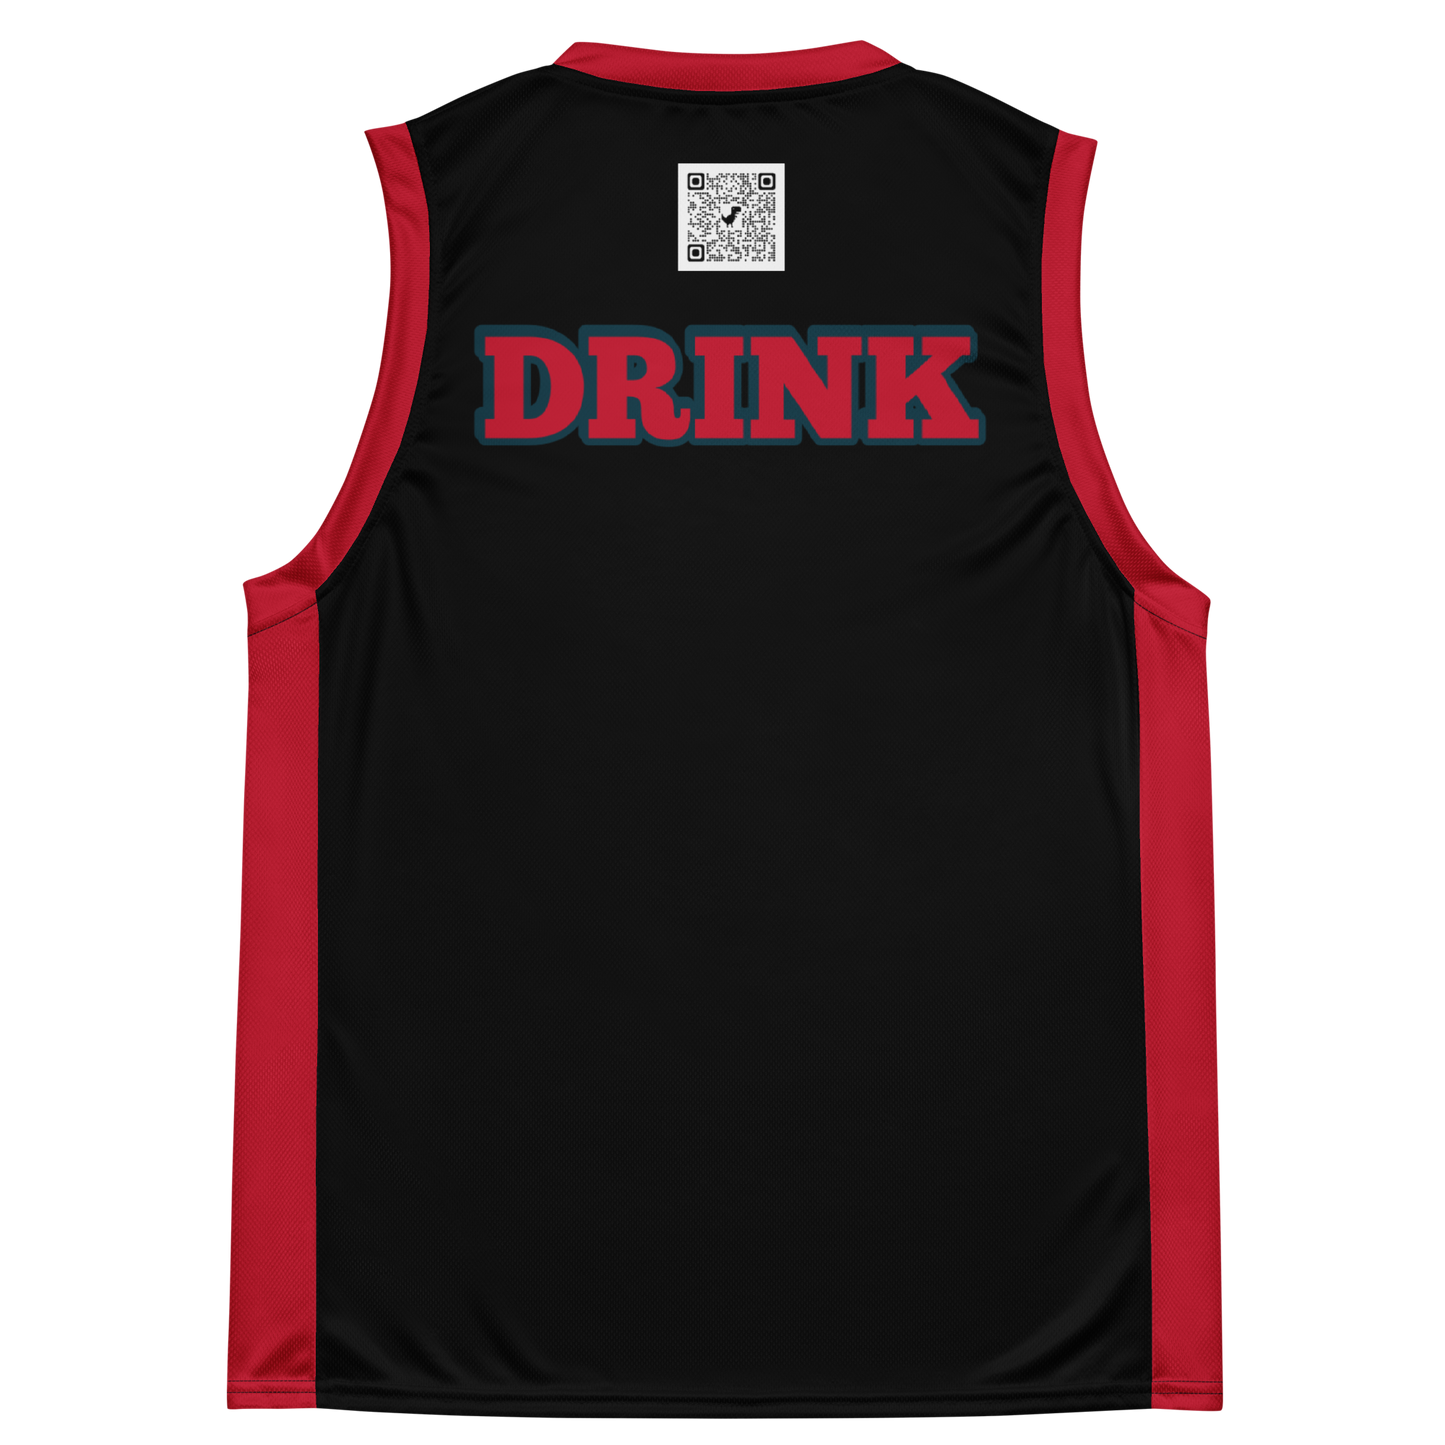 Team DRINK Basketball Jersey